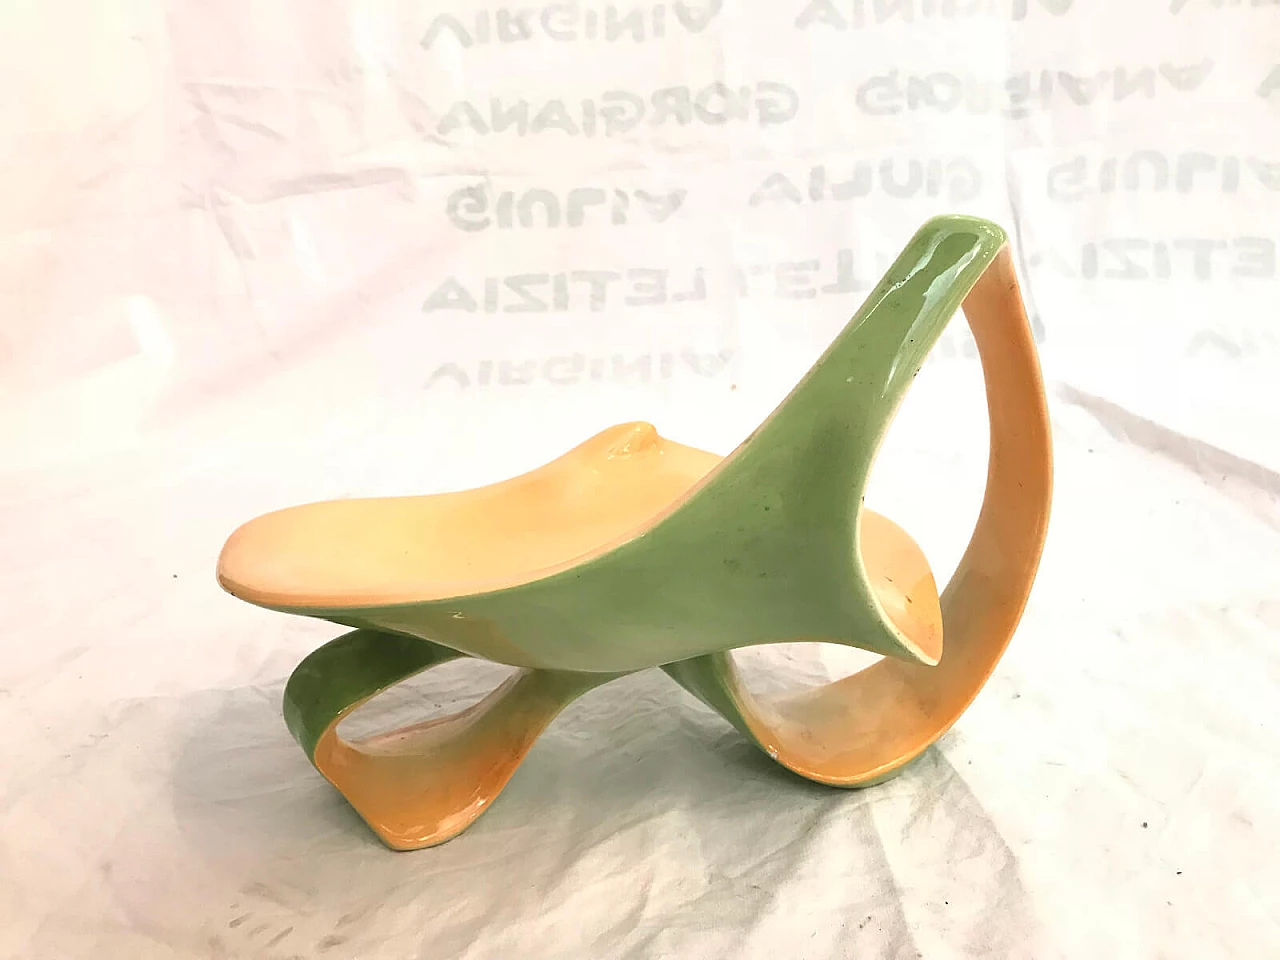 Alzatina in ceramica verde e gialla, anni ‘50 3